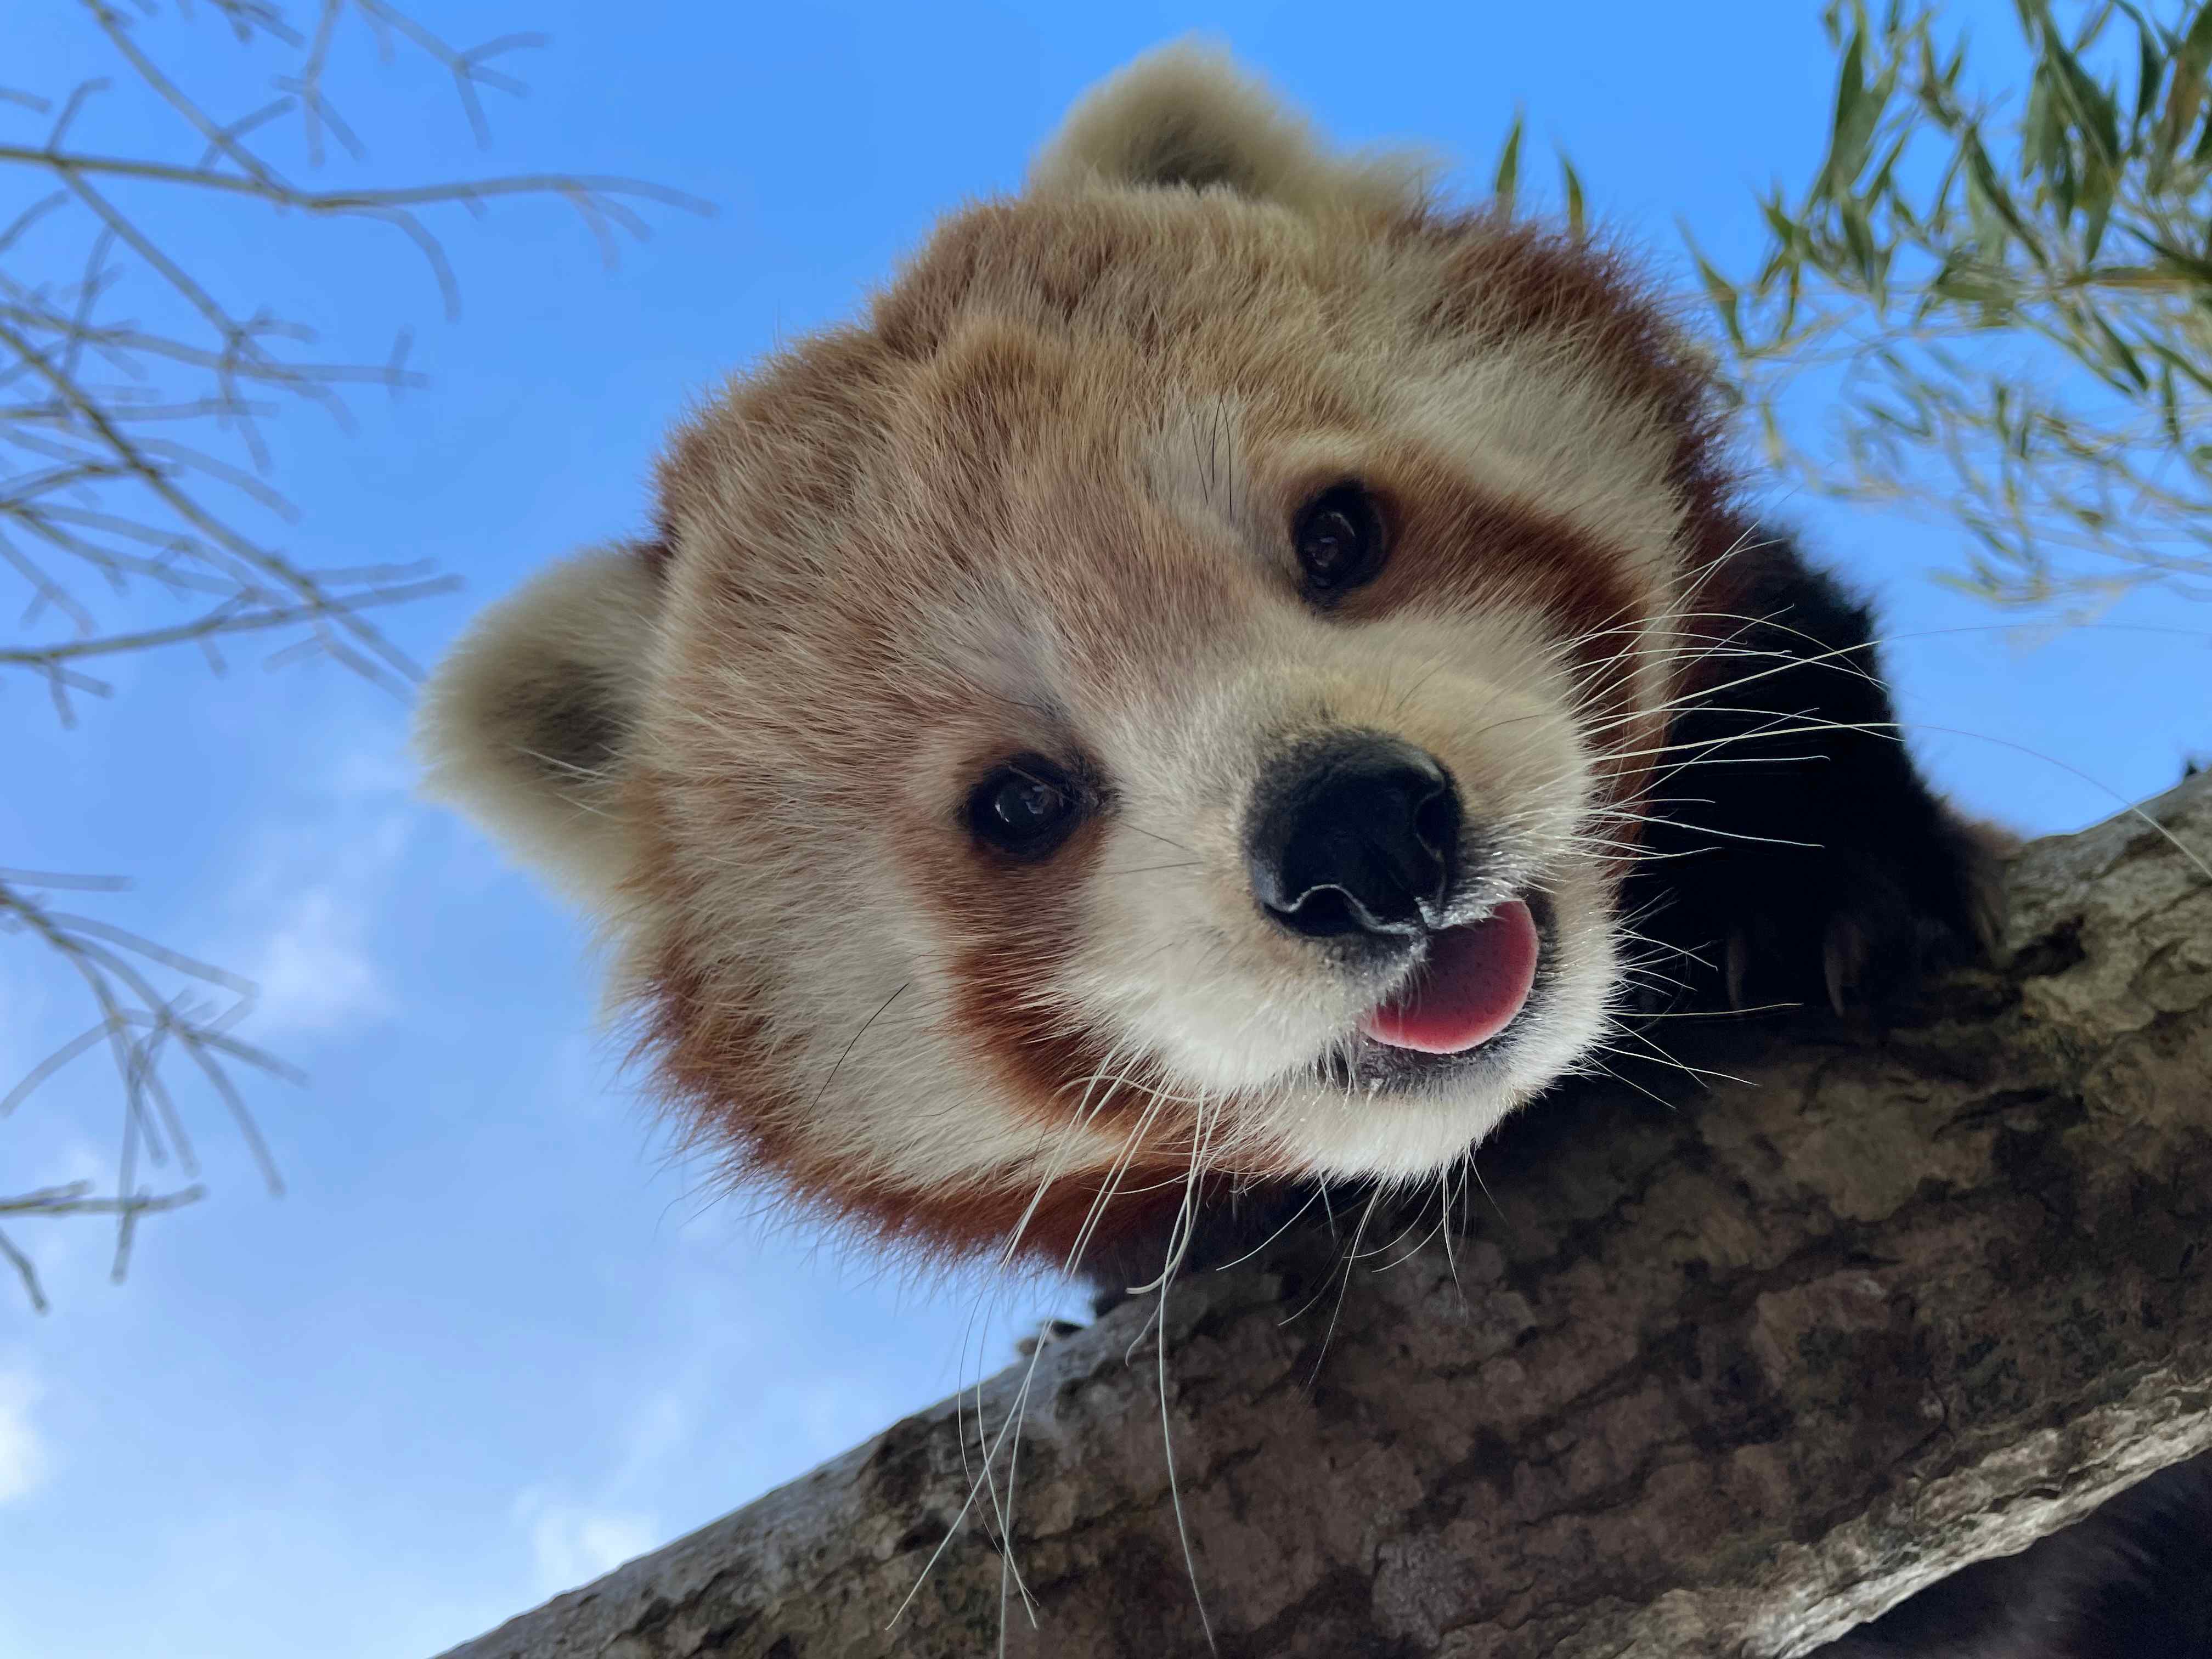 *Deceased* red panda Kitty close up image

Image: DARREN MCGARRY 2023